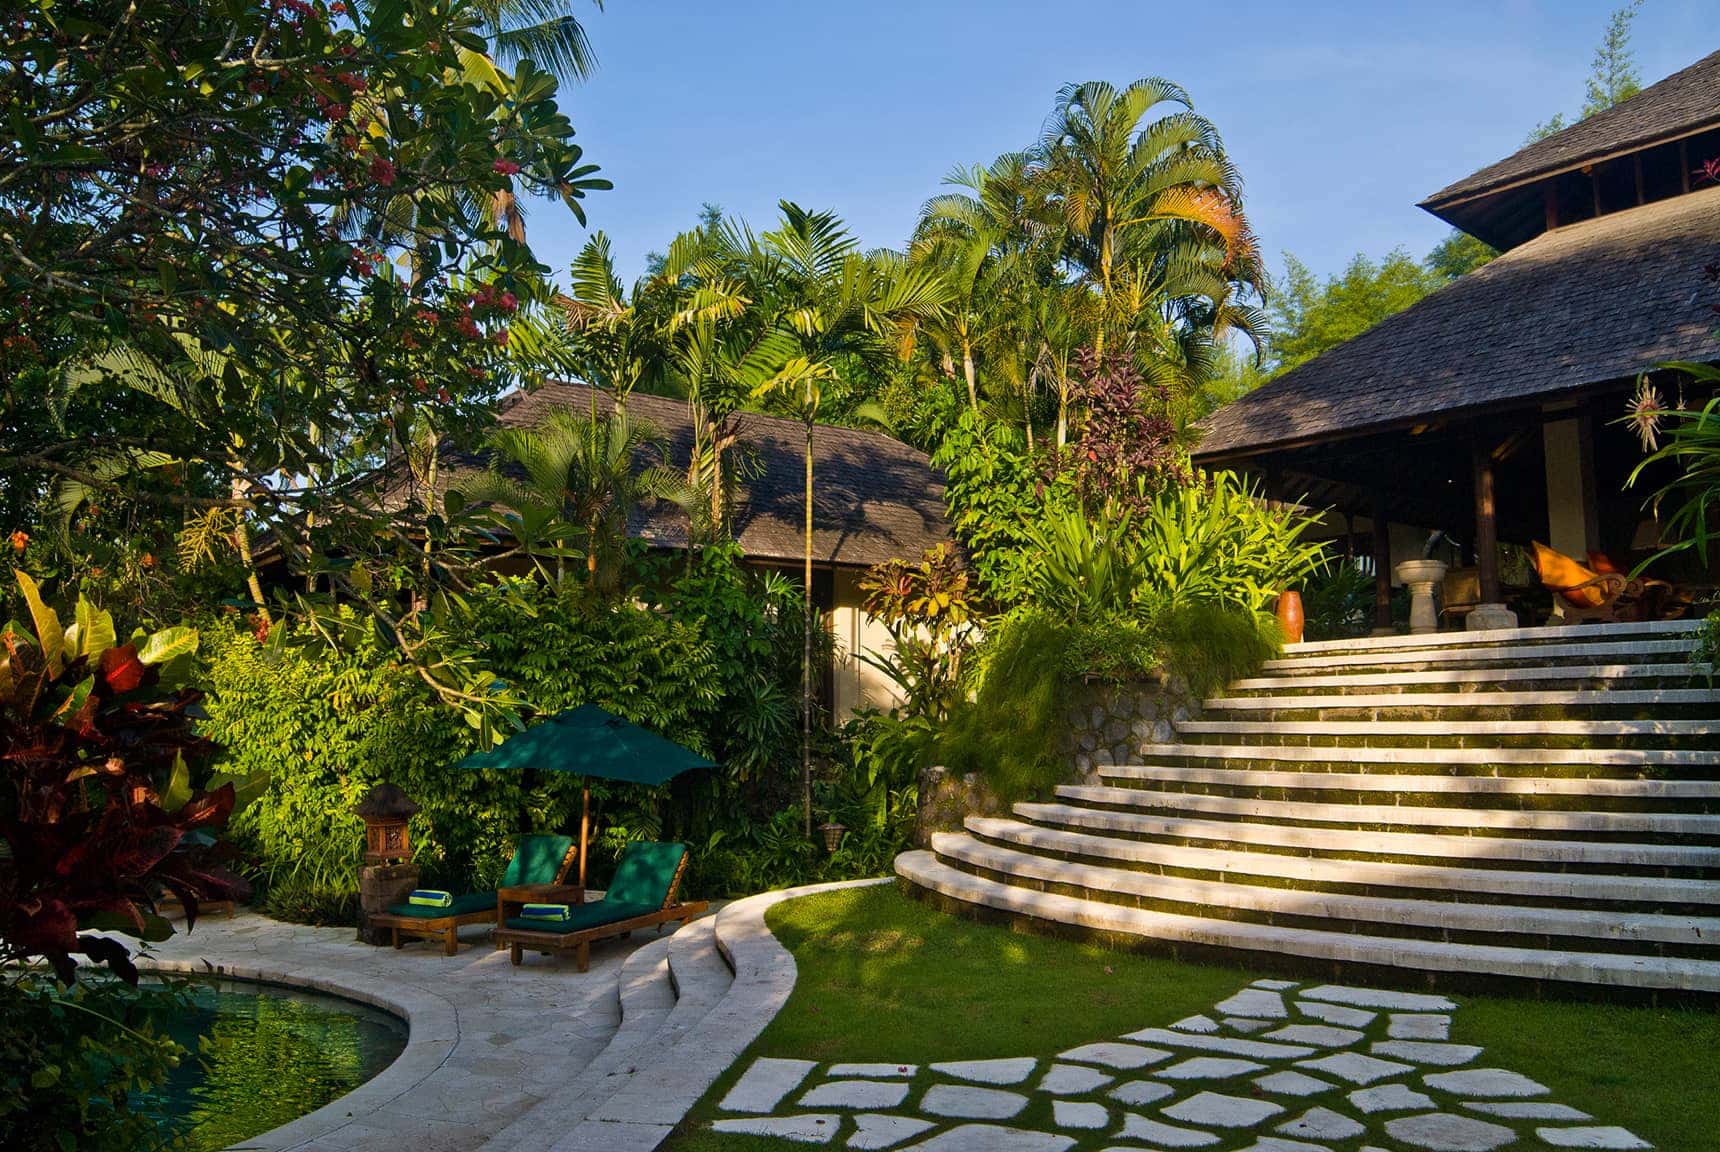 Villa Bougainvillea - Pererenan, Bali Indonesia (Bali villa photography by master photographer Rick Carmichael of LuxViz)